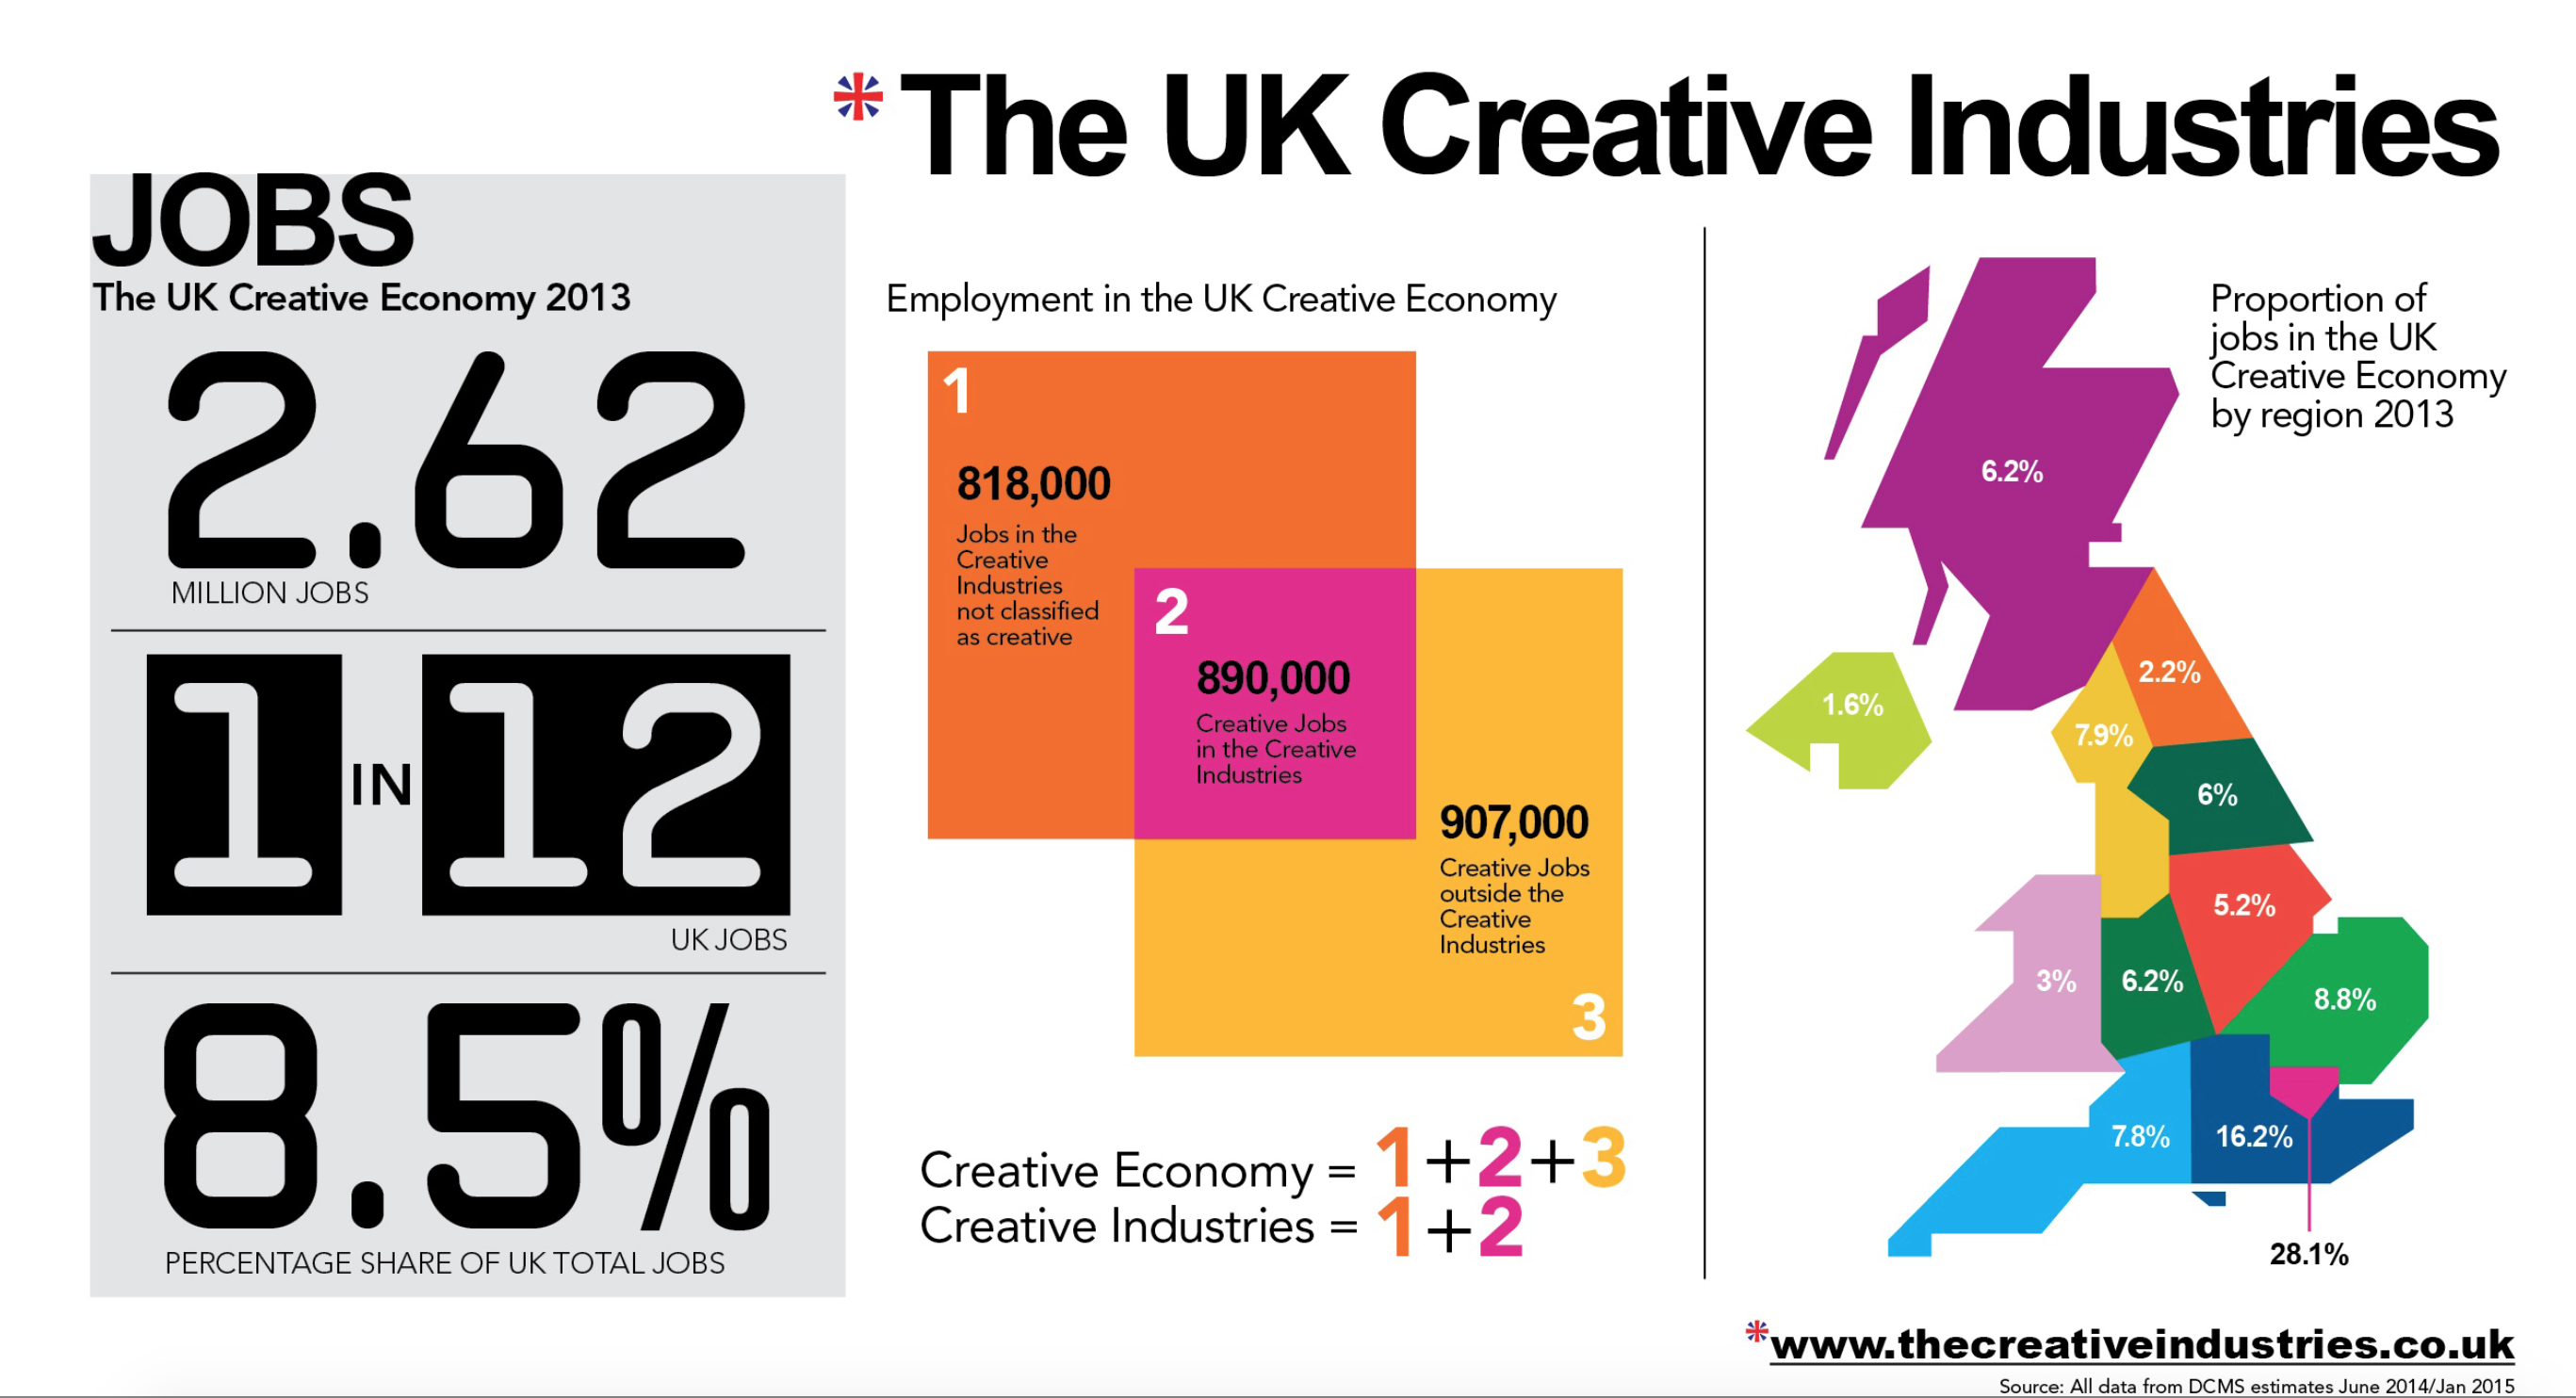 Jobs in the UK Creative Industries